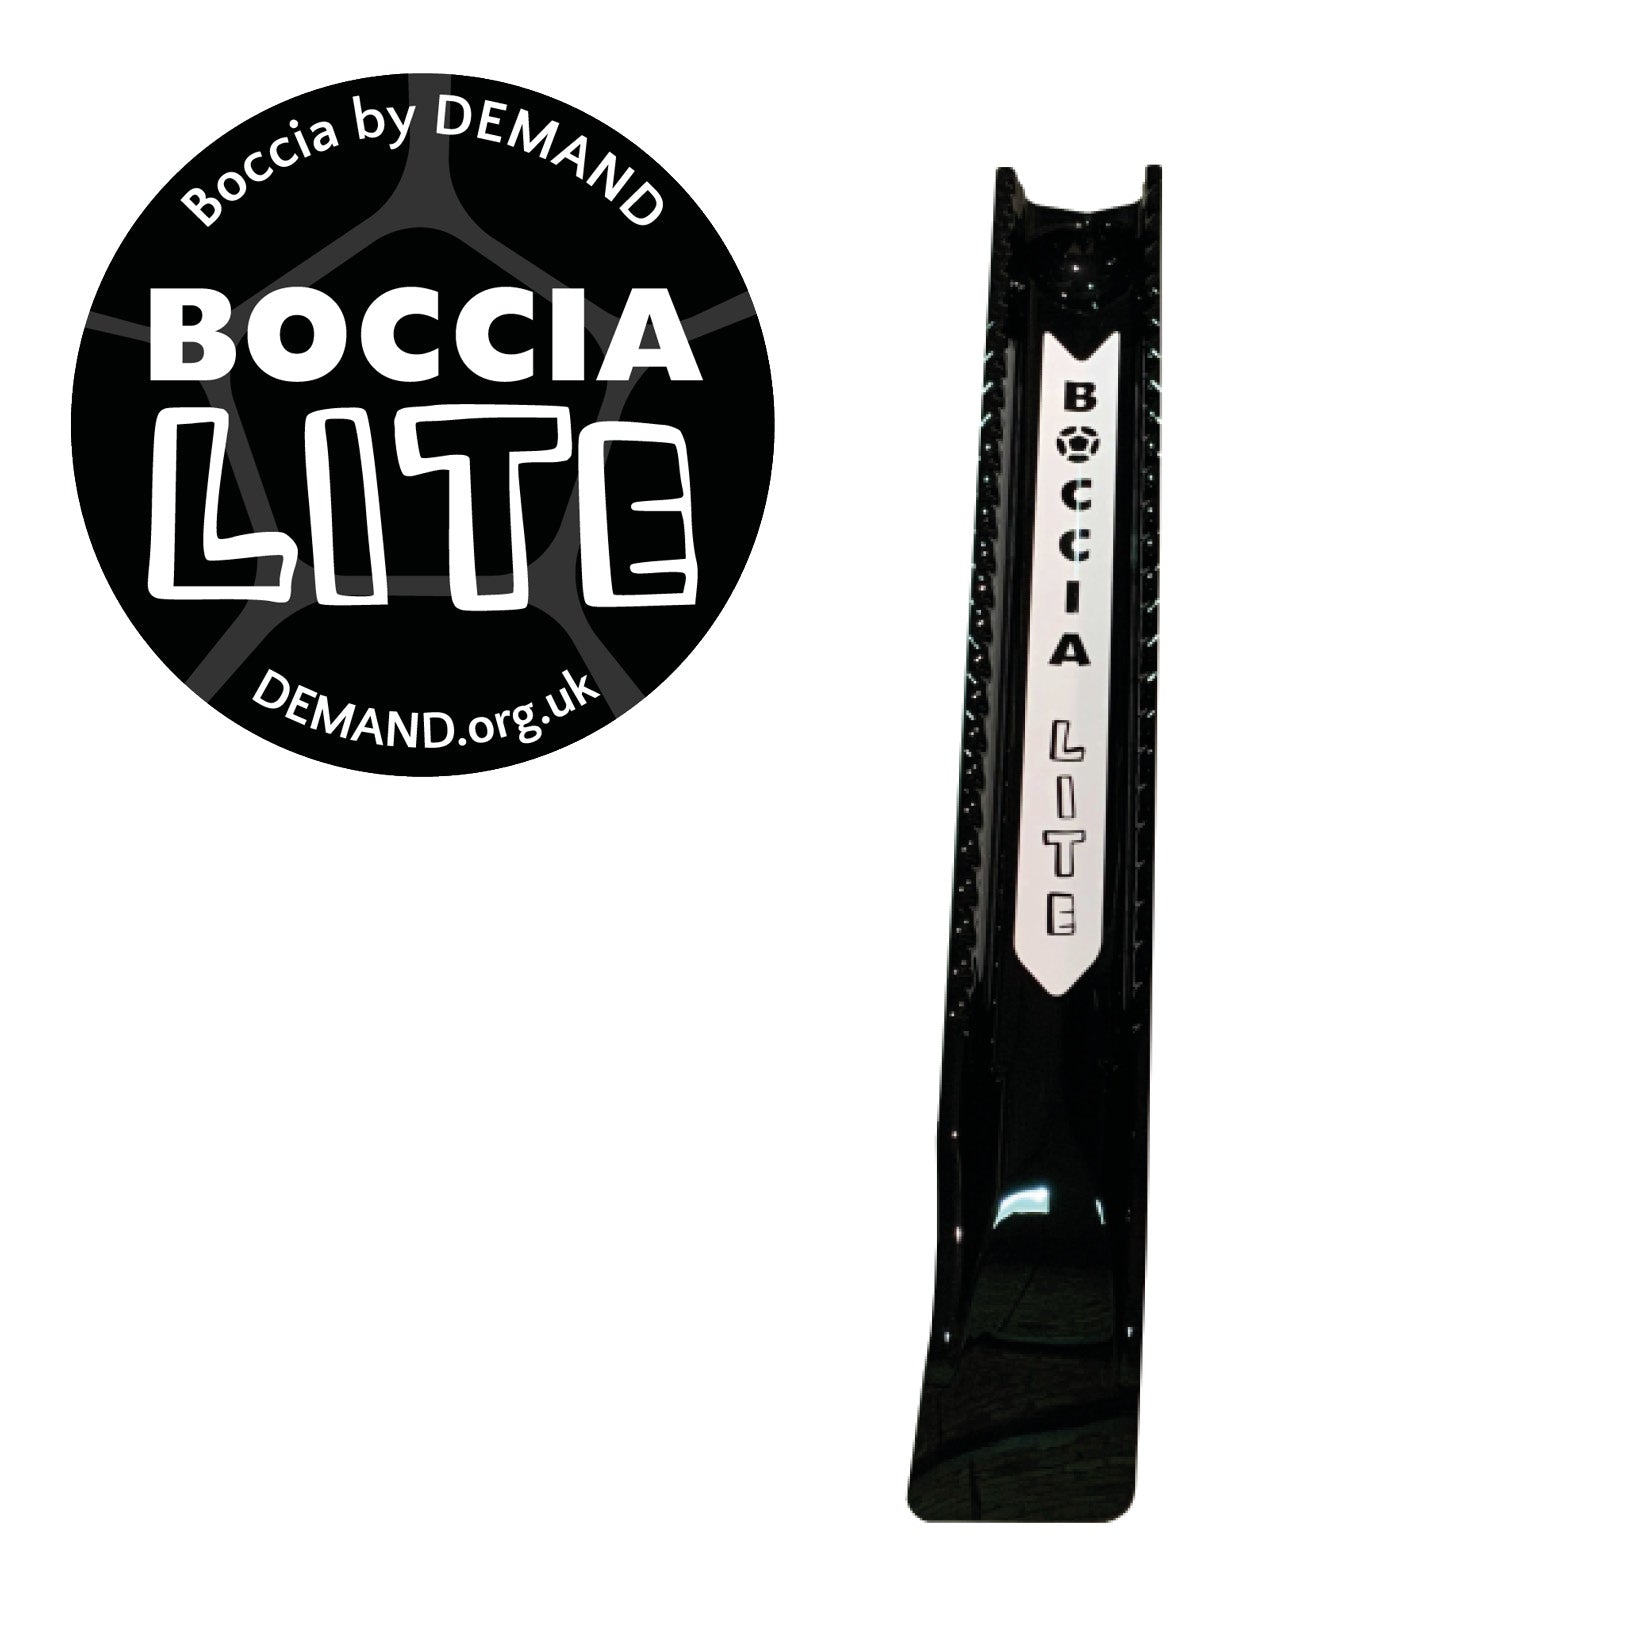 Boccia Lite ramp front view with logo